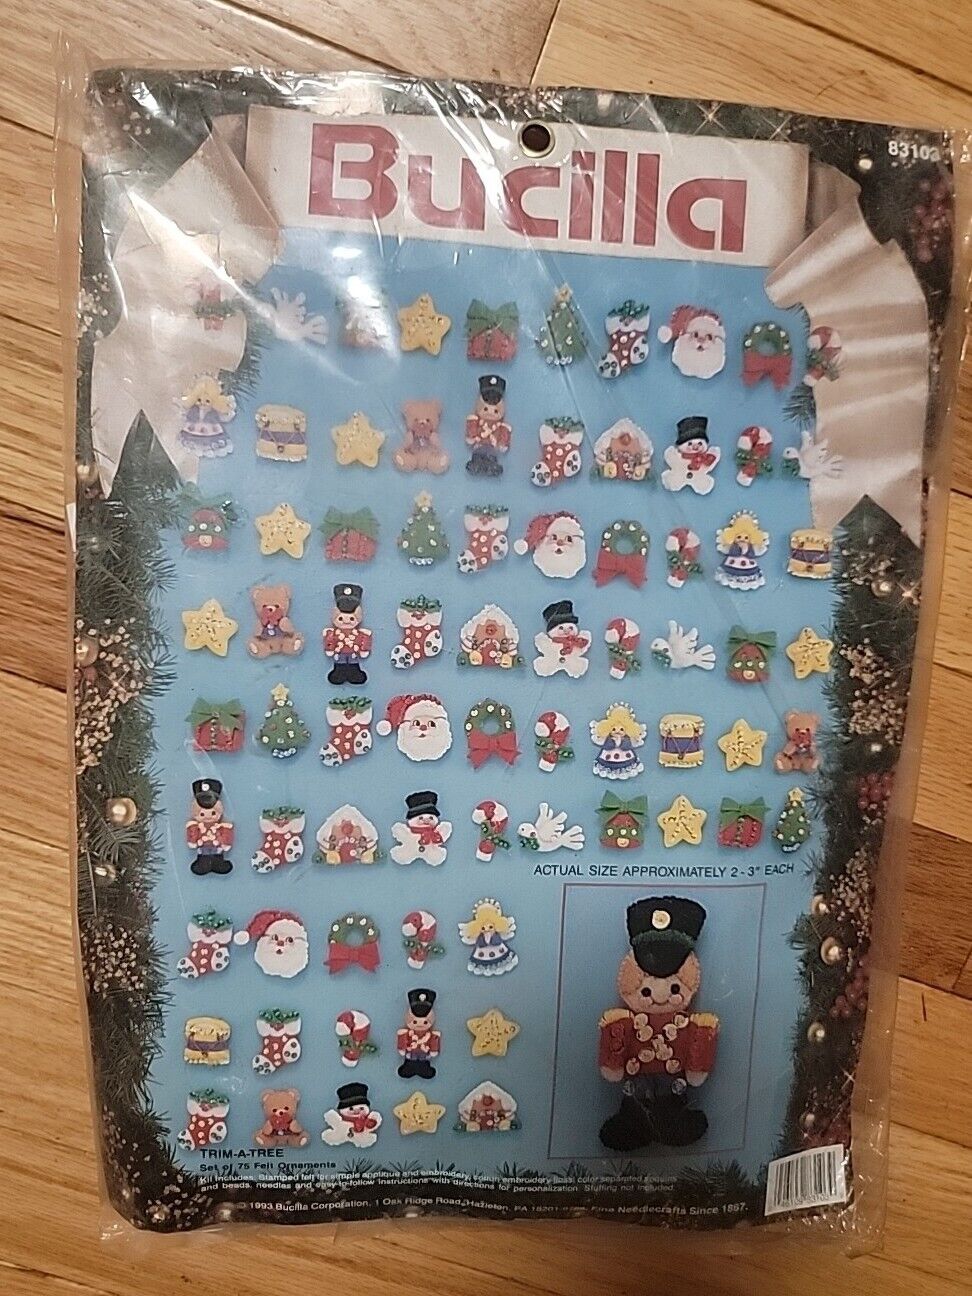 Bucilla Christmas Ornaments 1993 Jeweled Felt Embroidery Kit  Trim-A-Tree Set 75